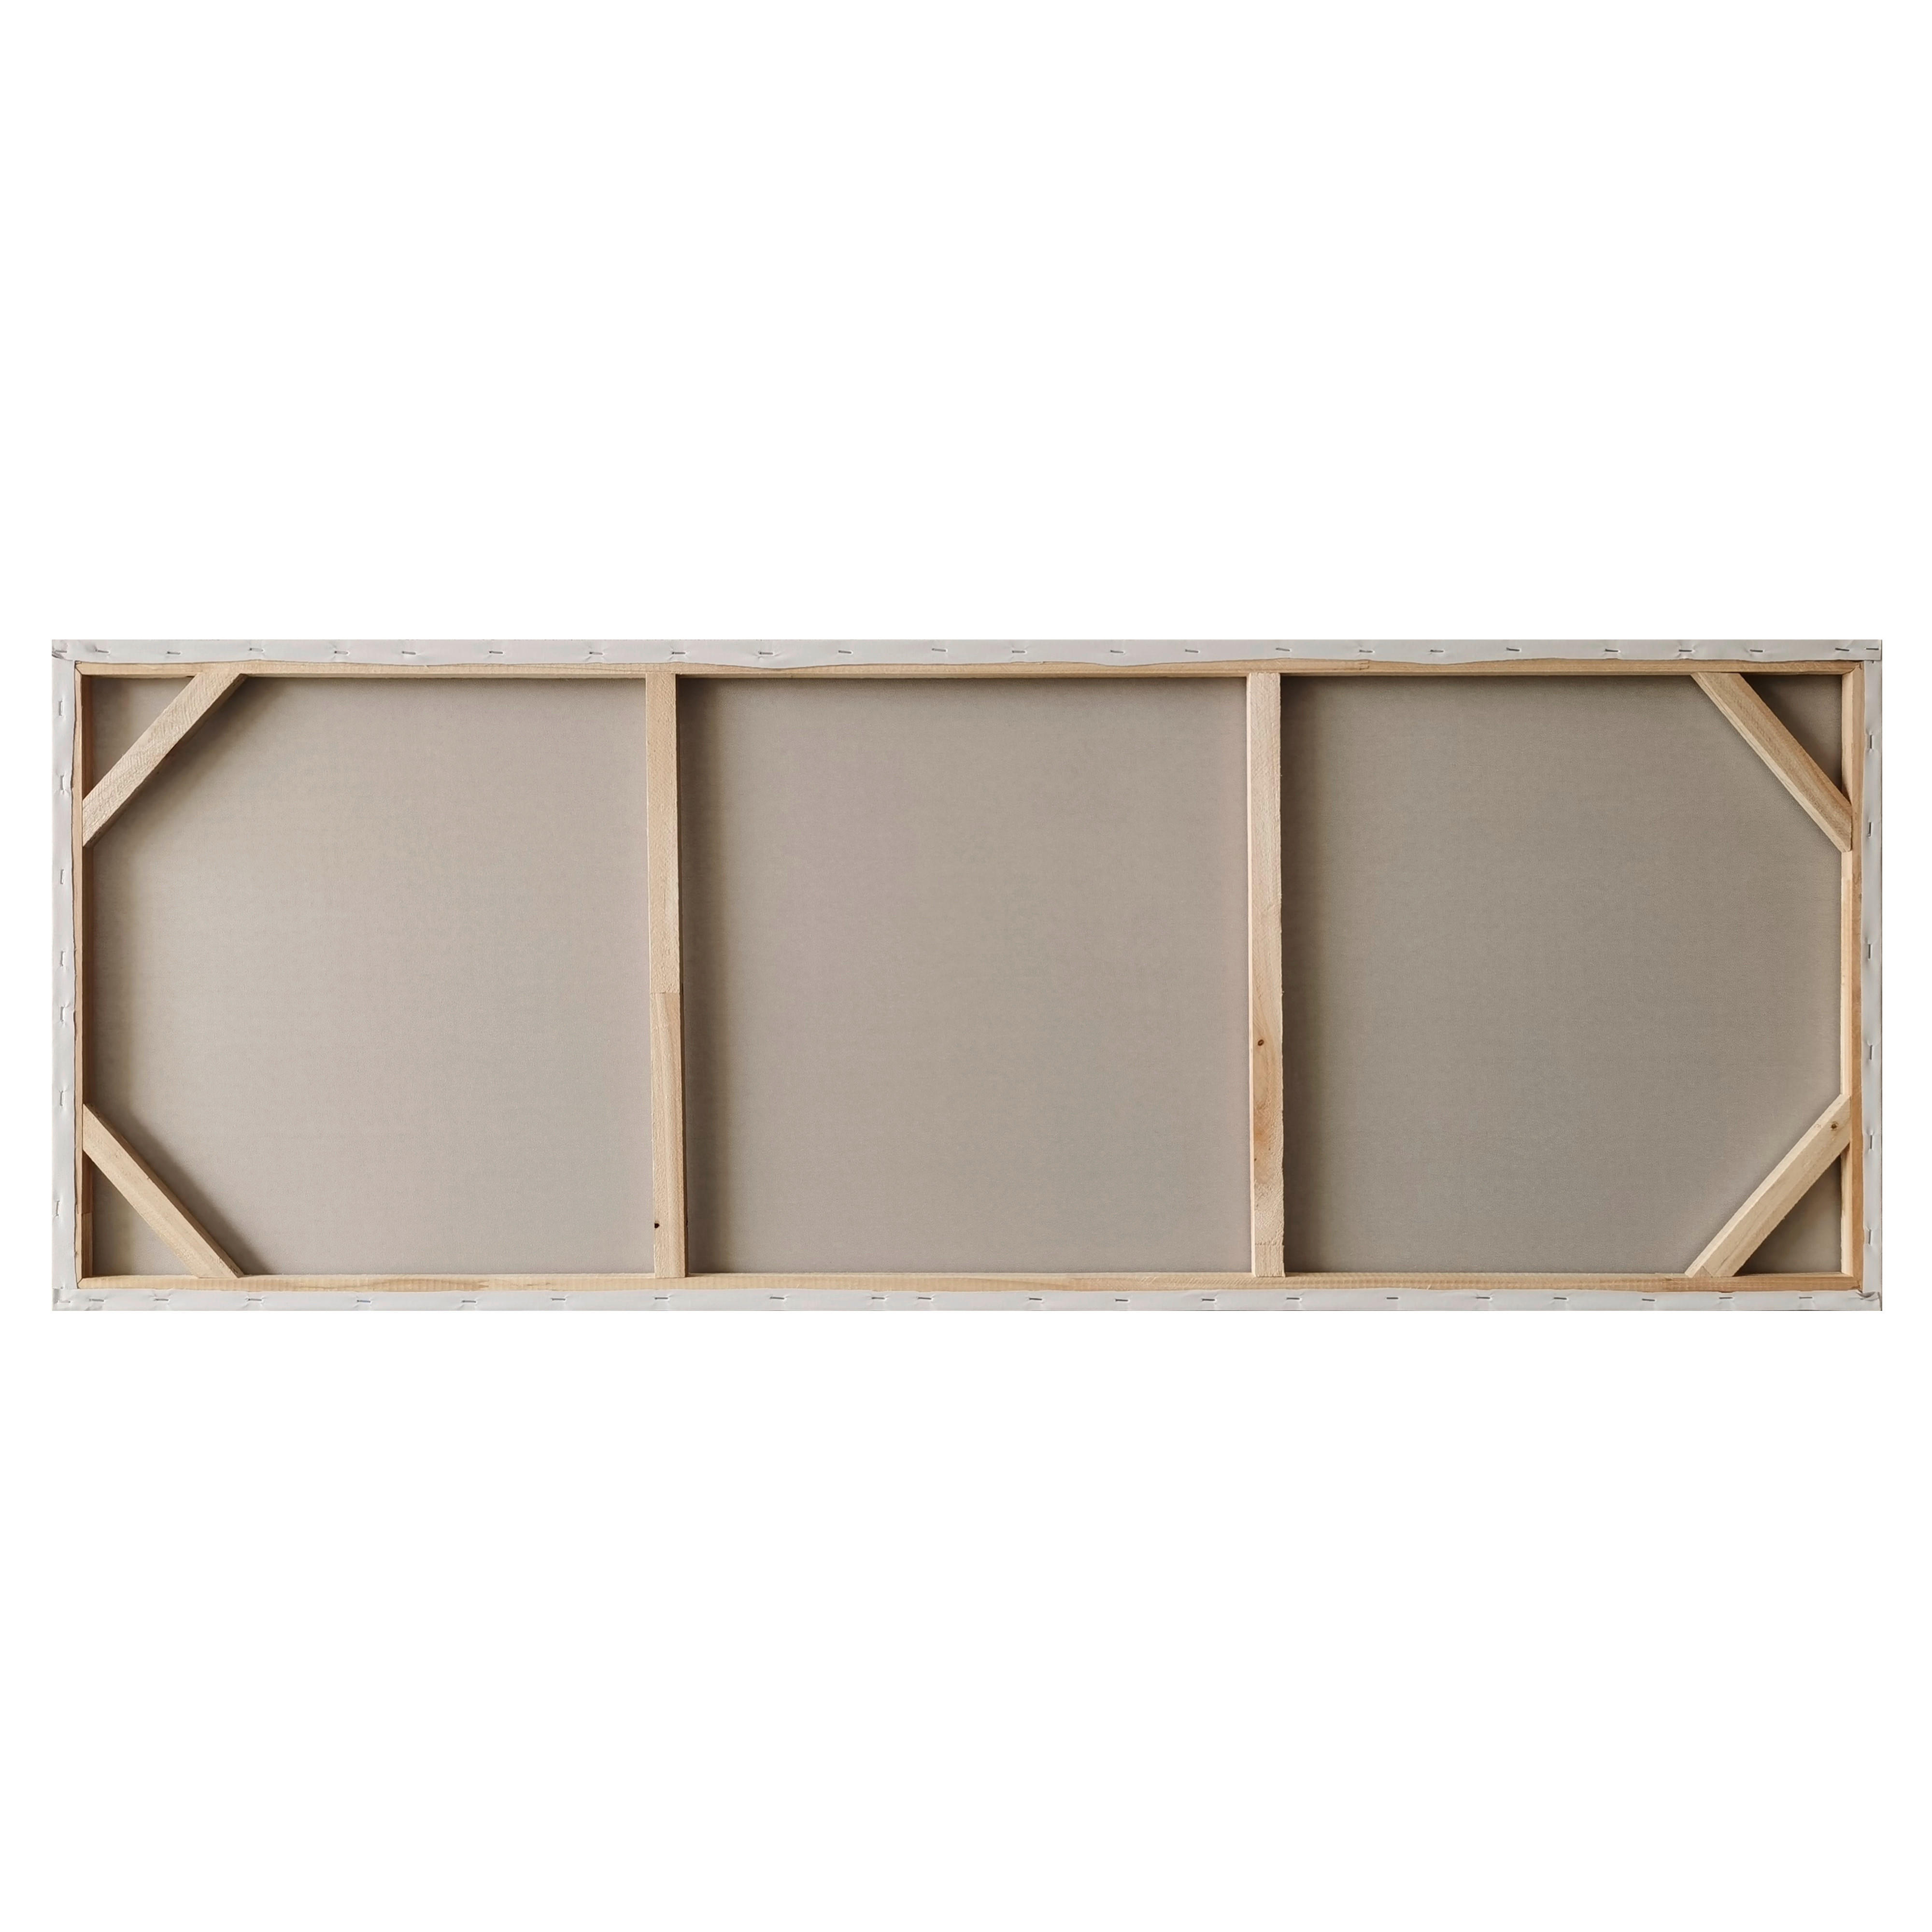 OLEJOMAĽBA, abstraktné, 150/55 cm  - hnedá/biela, Design, drevo/textil (150/55cm) - Monee